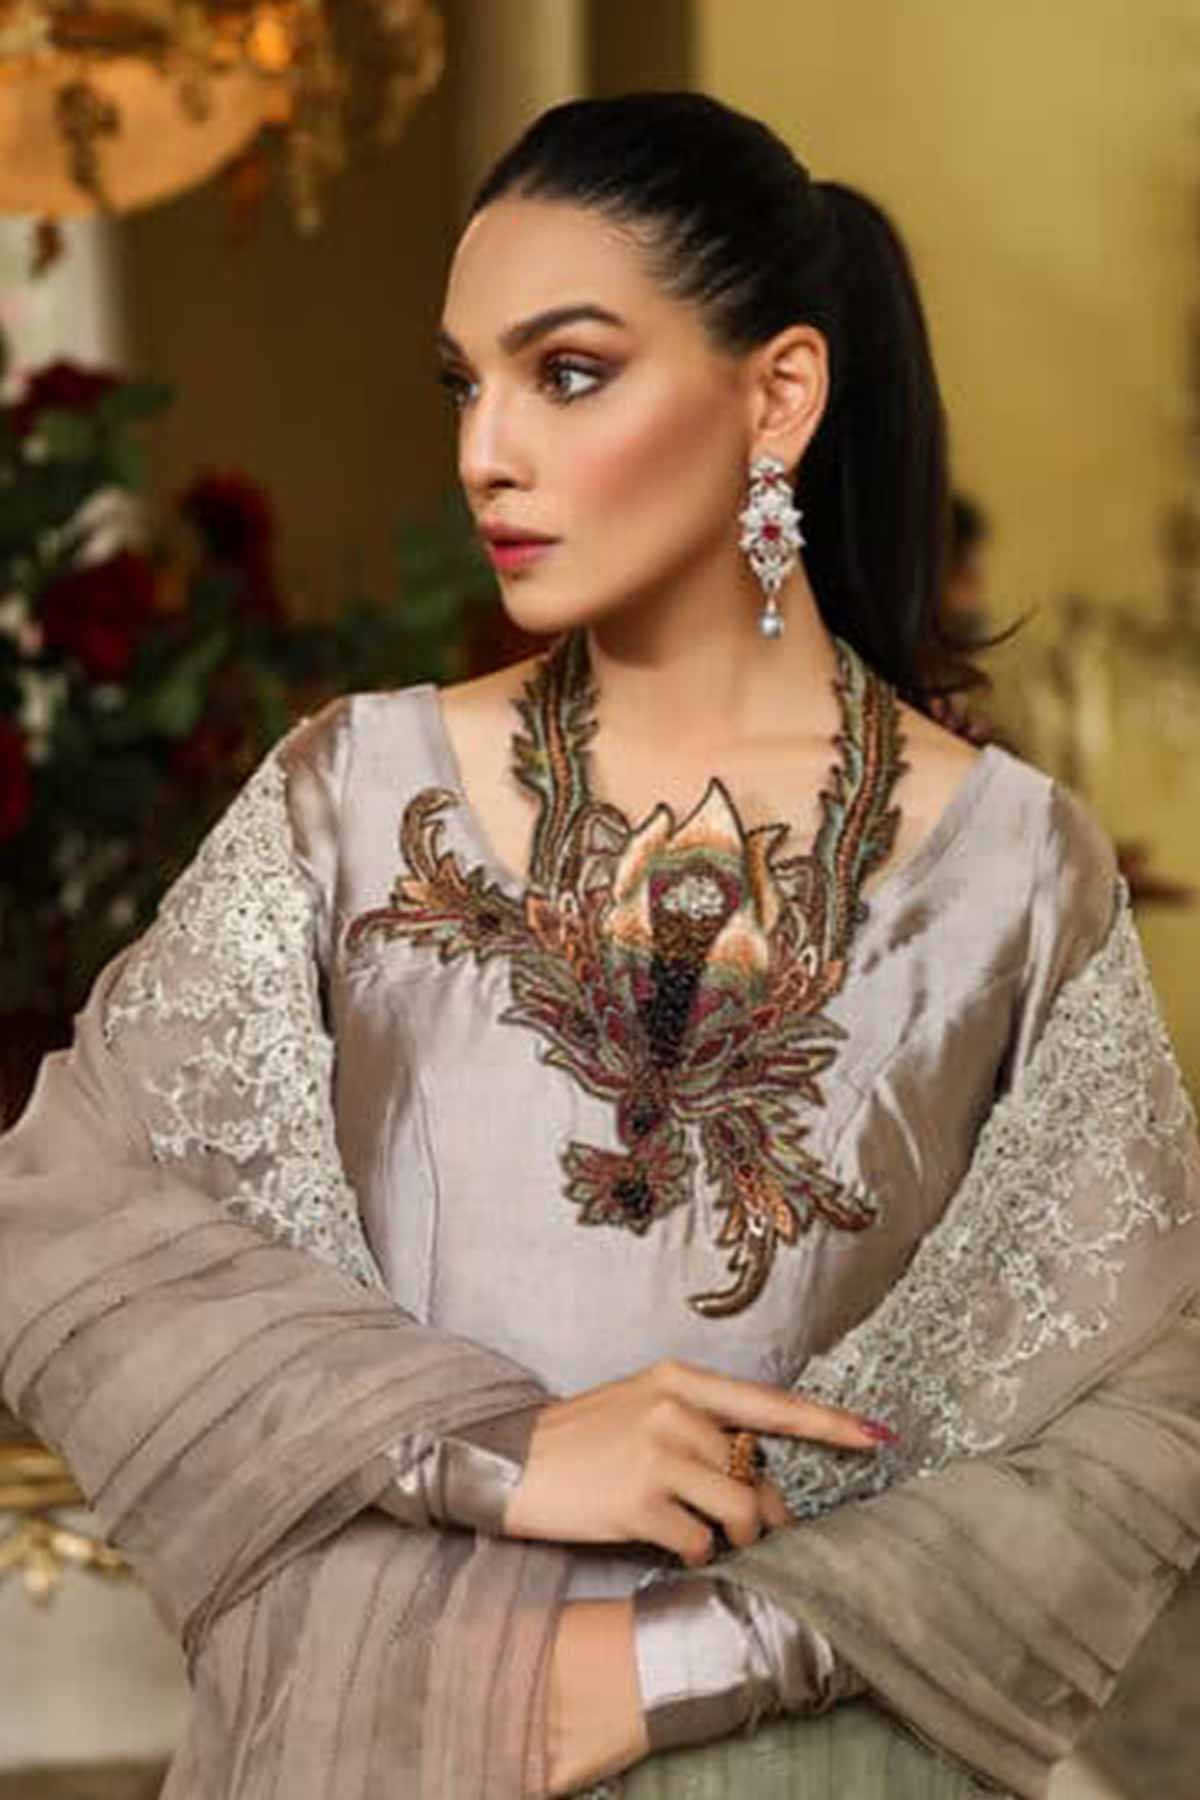 Queen Tsarina - Nilofer Shahid